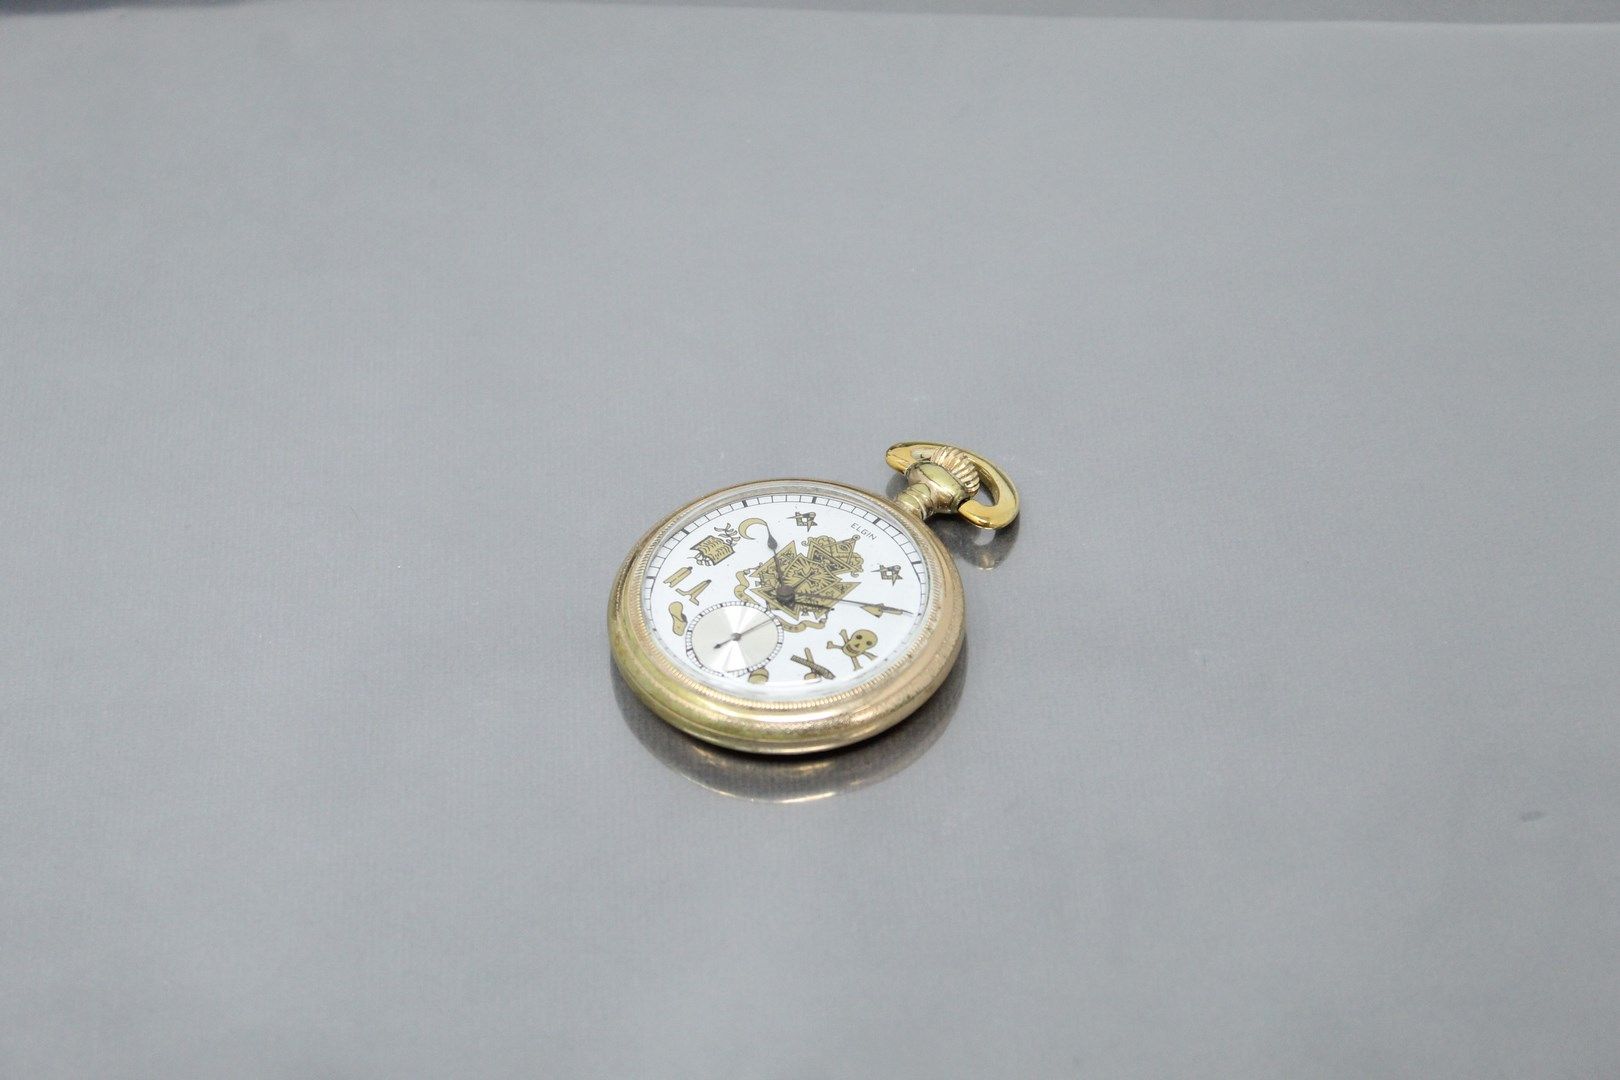 Null 辽宁省

鎏金金属怀表，白色表盘上装饰有共济会的符号。

签名是ELGIN。

直径：46毫米。